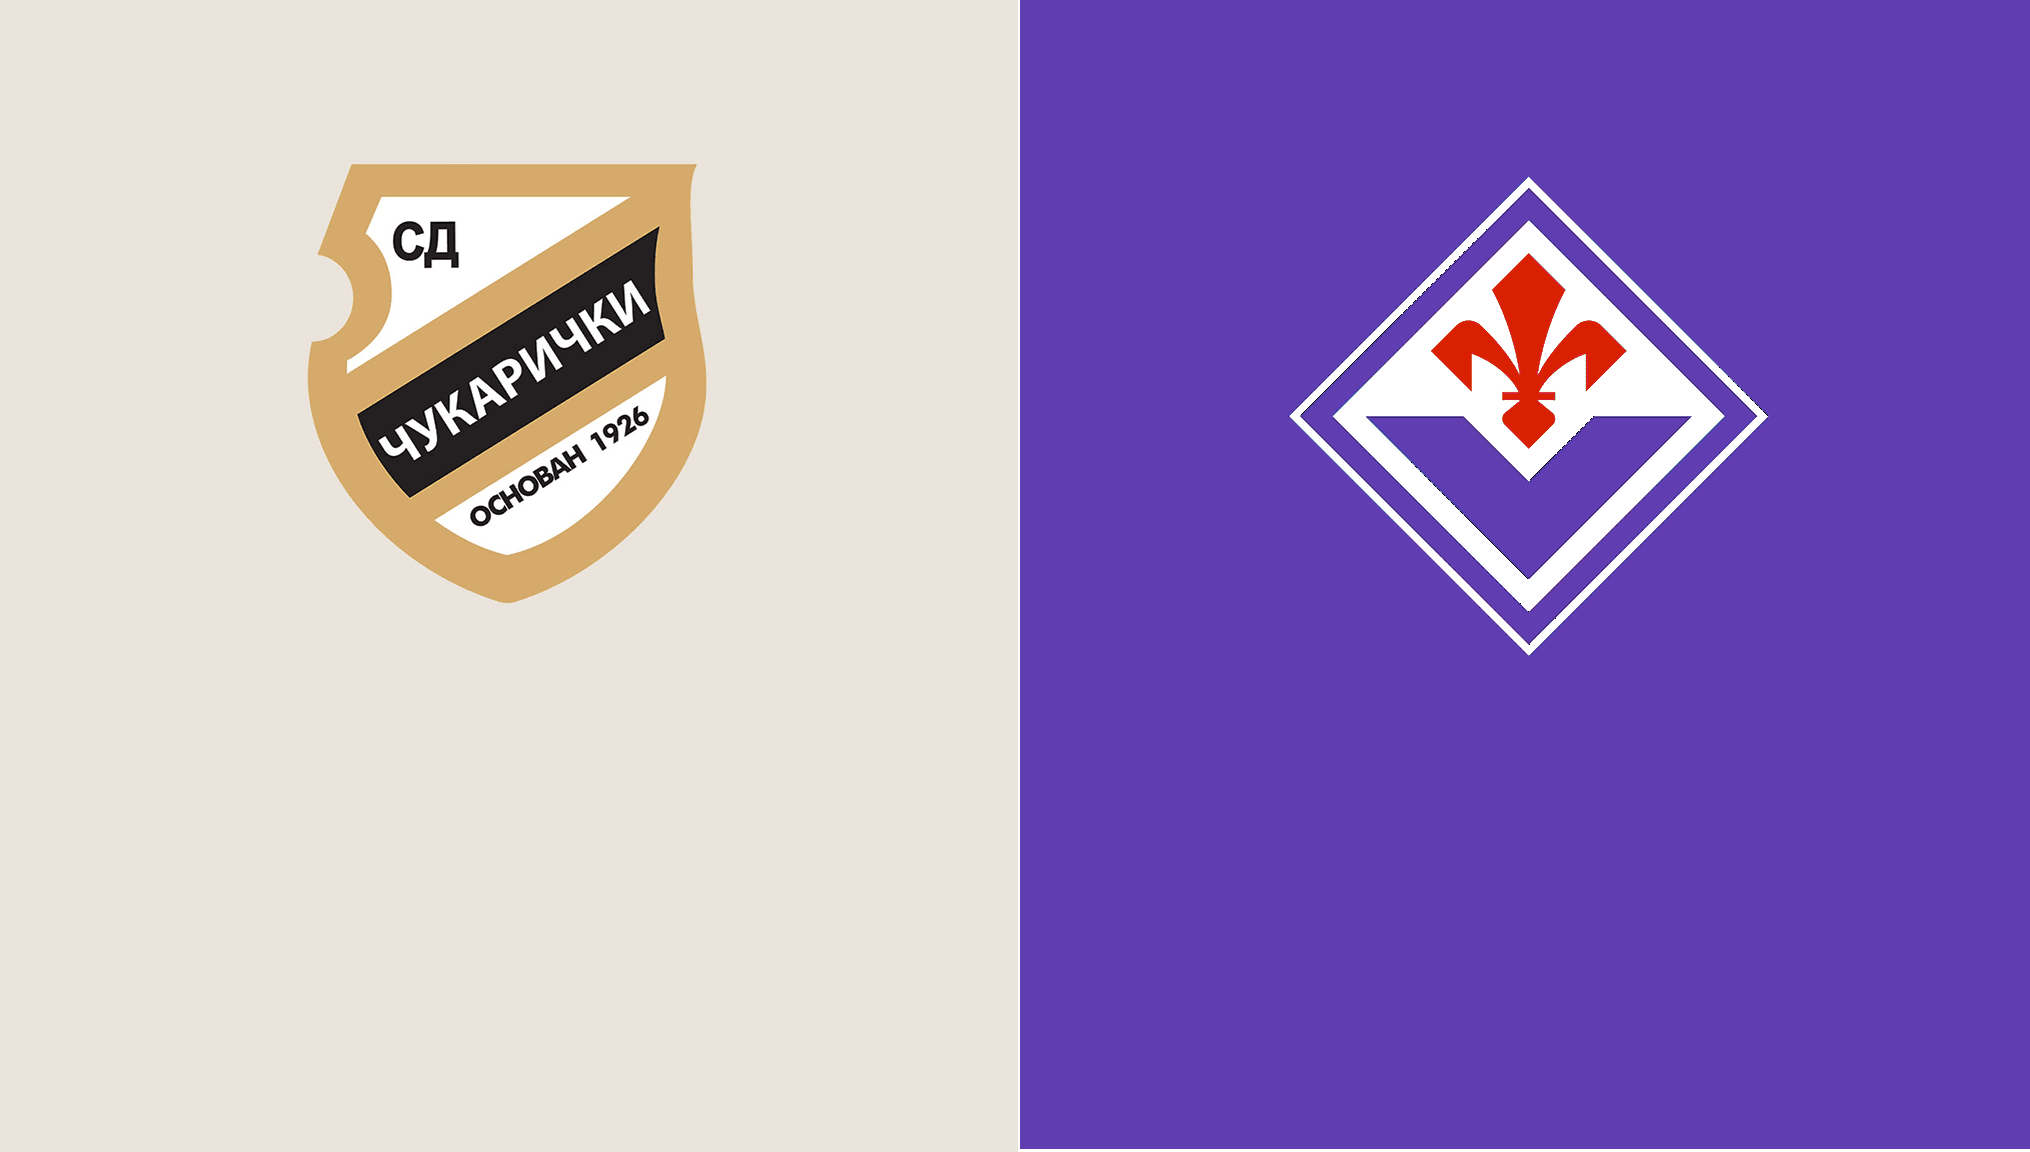 Cukaricki Fiorentina: Beltran e Kayode out. Convocato Pierozzi